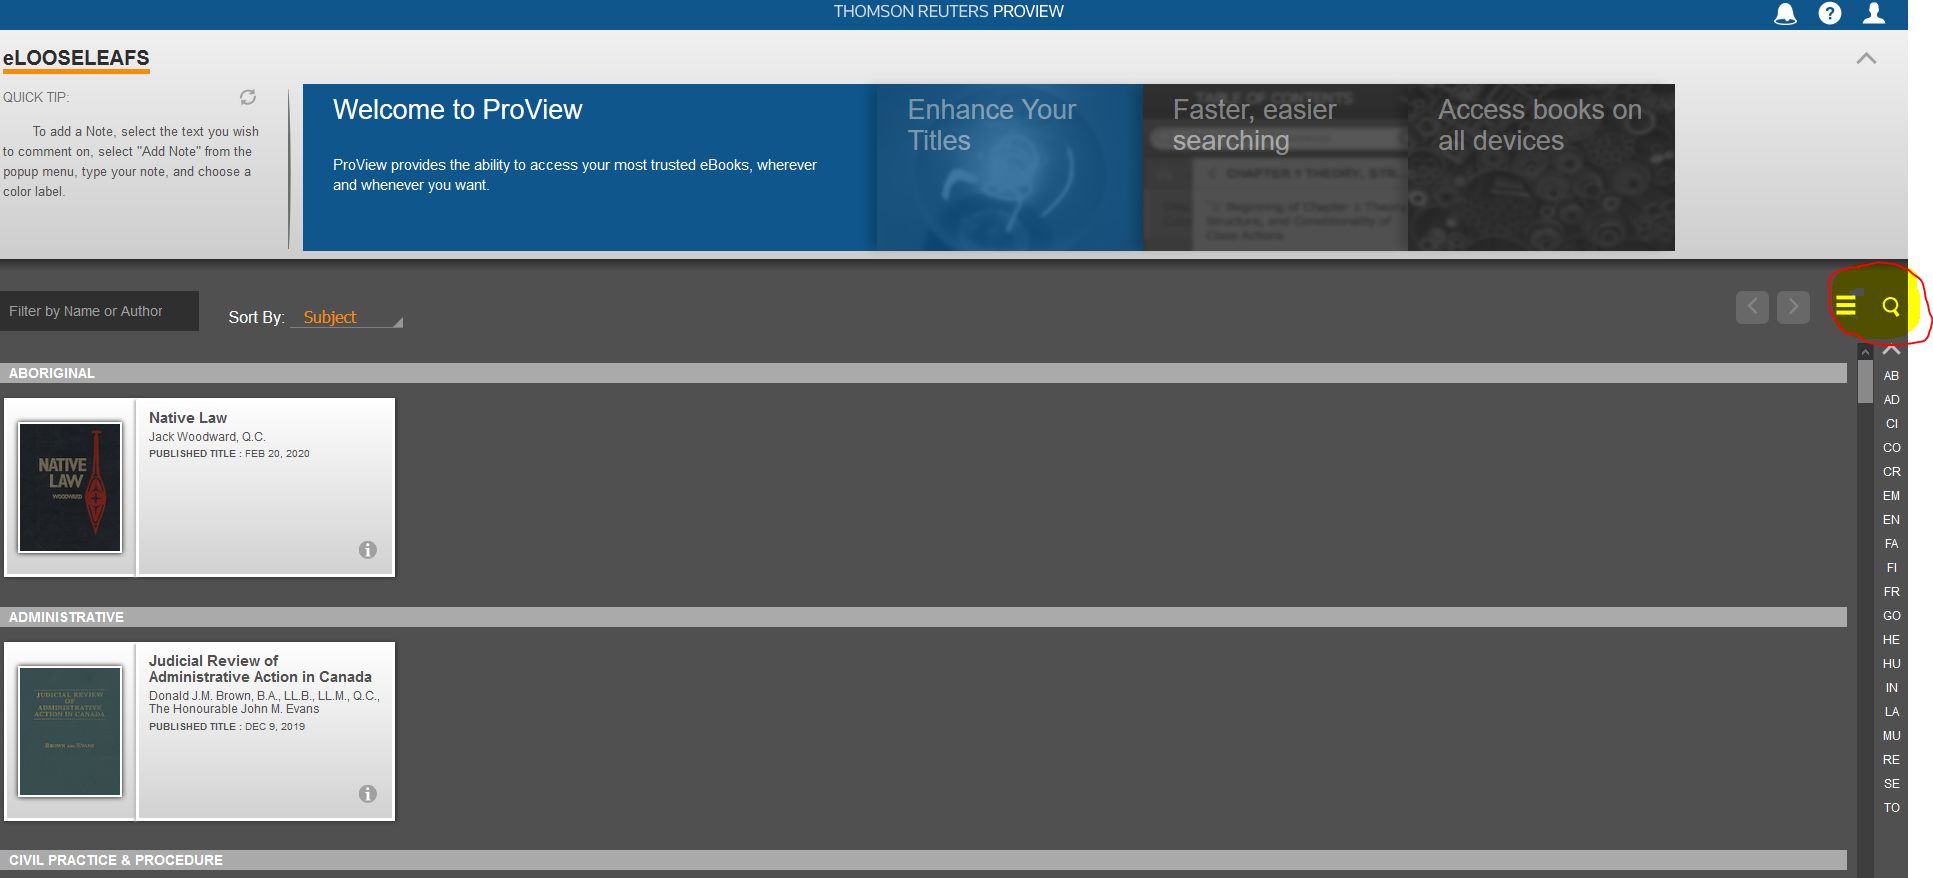 ProView homepage screenshot